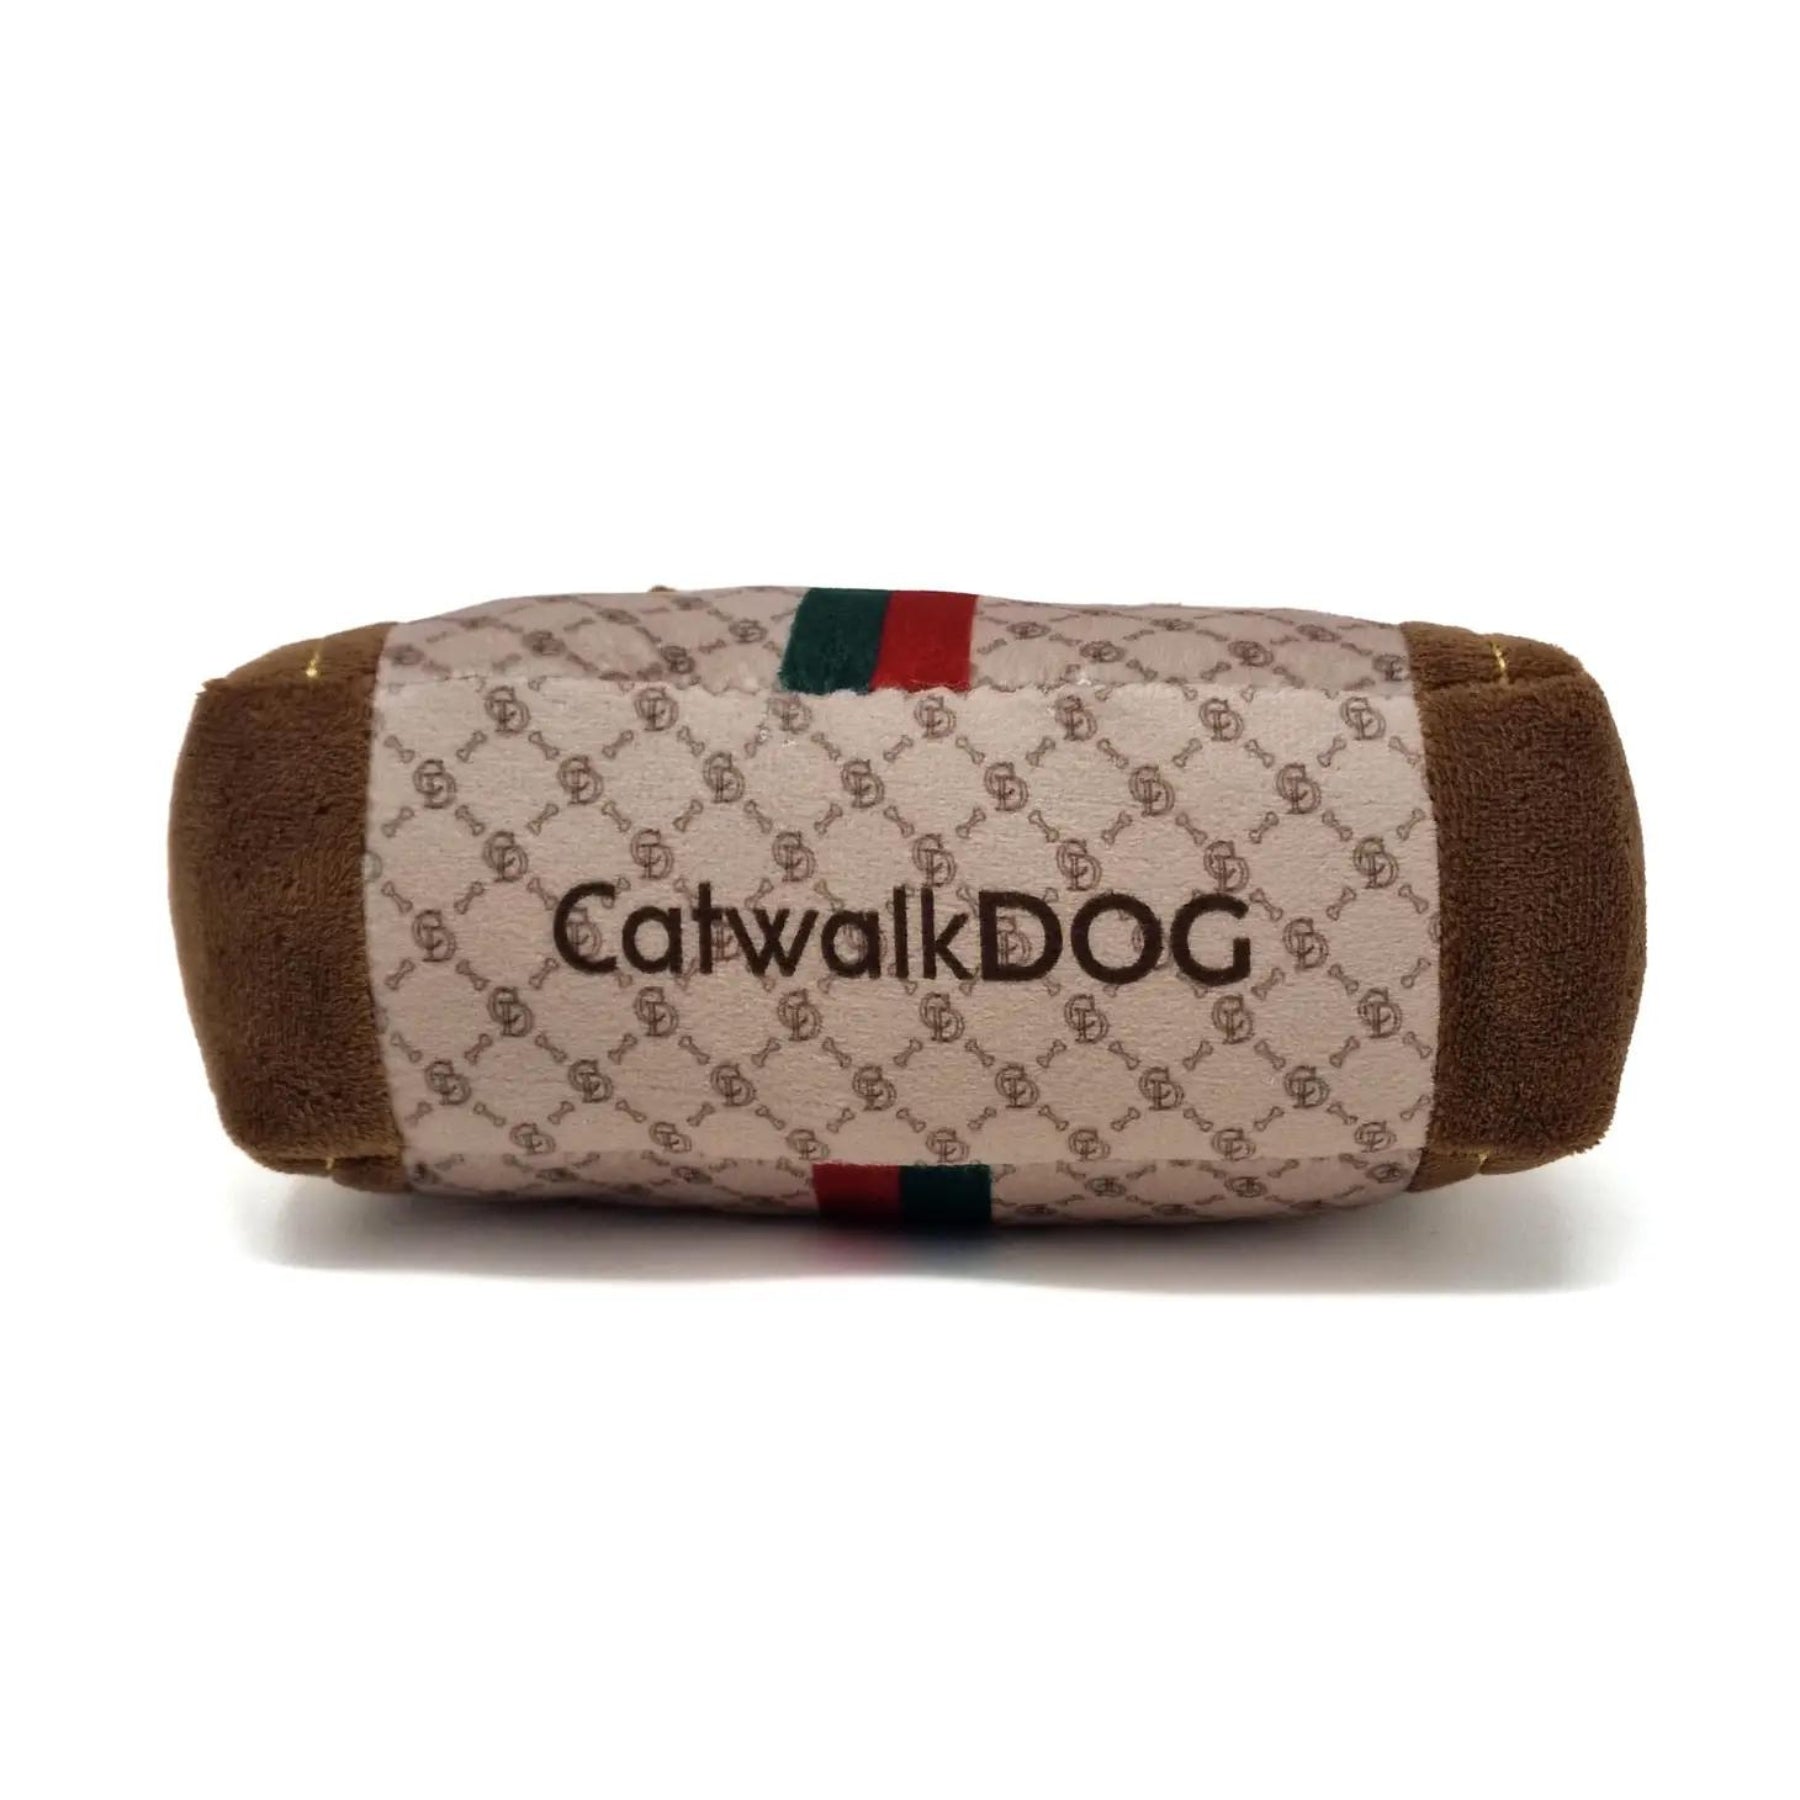 CatwalkDog Chewy Louis Handbag Dog Toy, Plush Toys